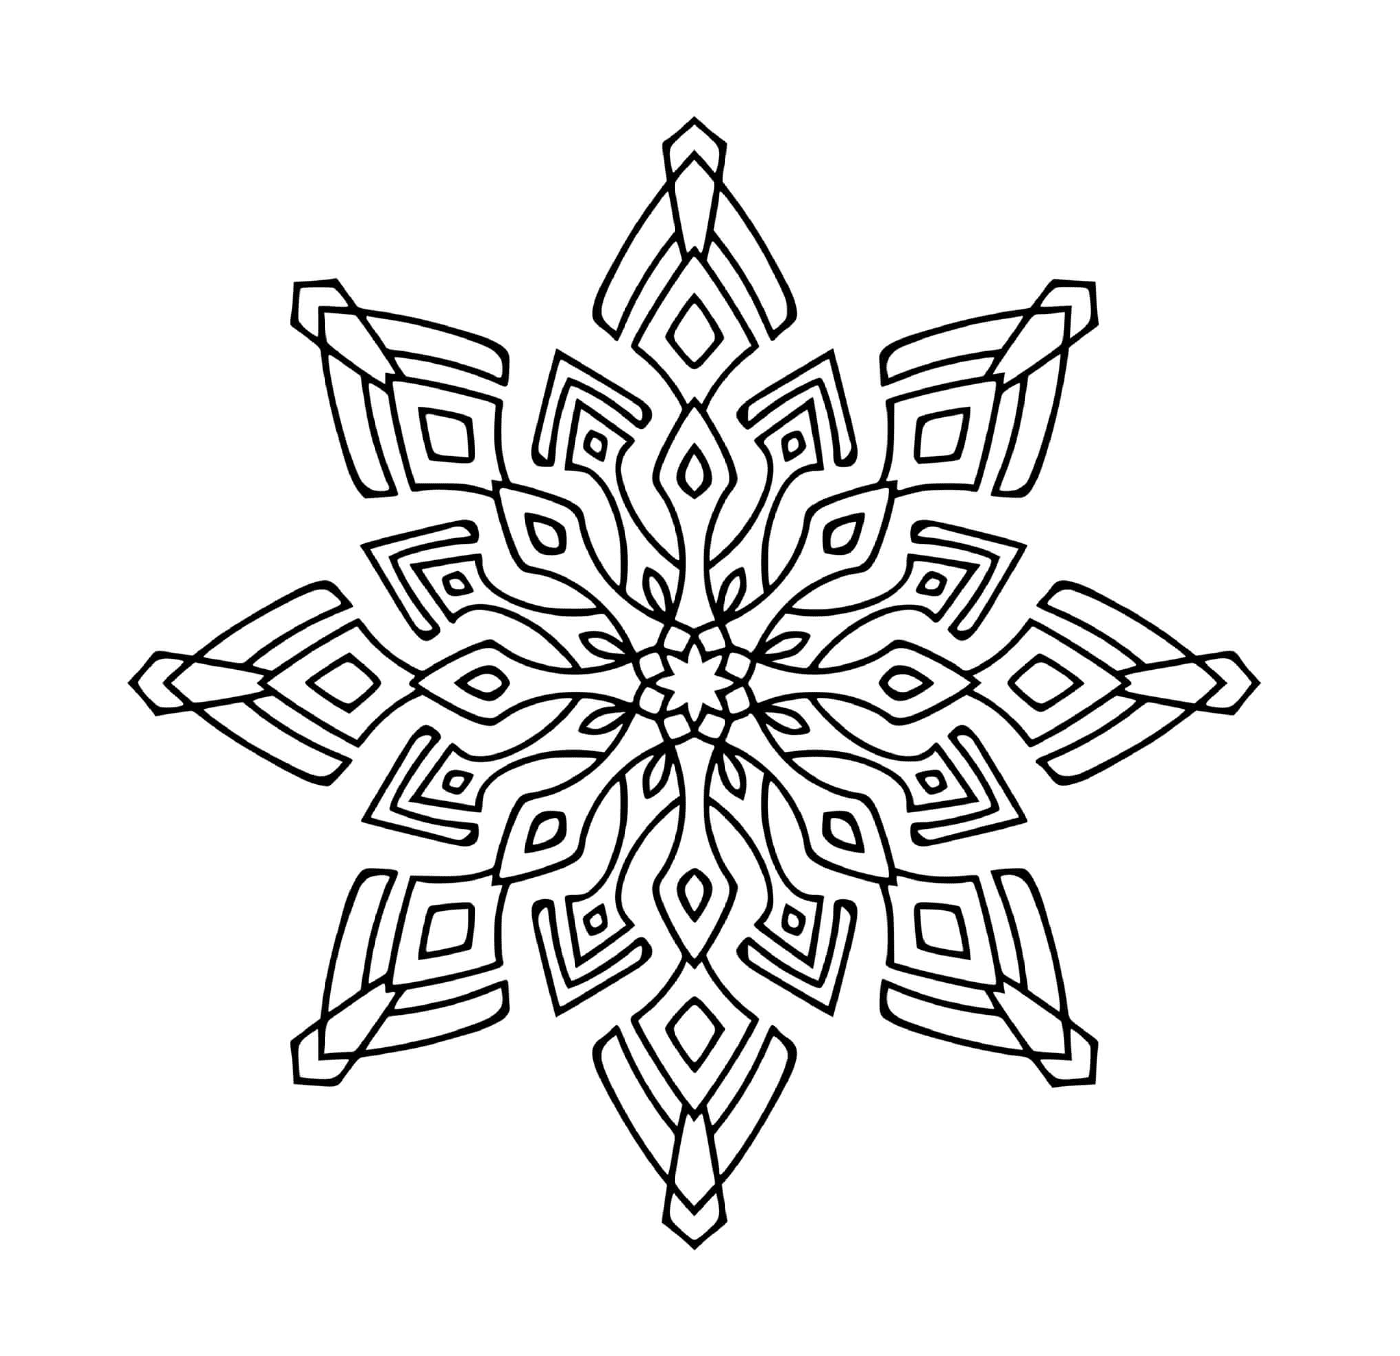  A modern snowflake design in mandala 